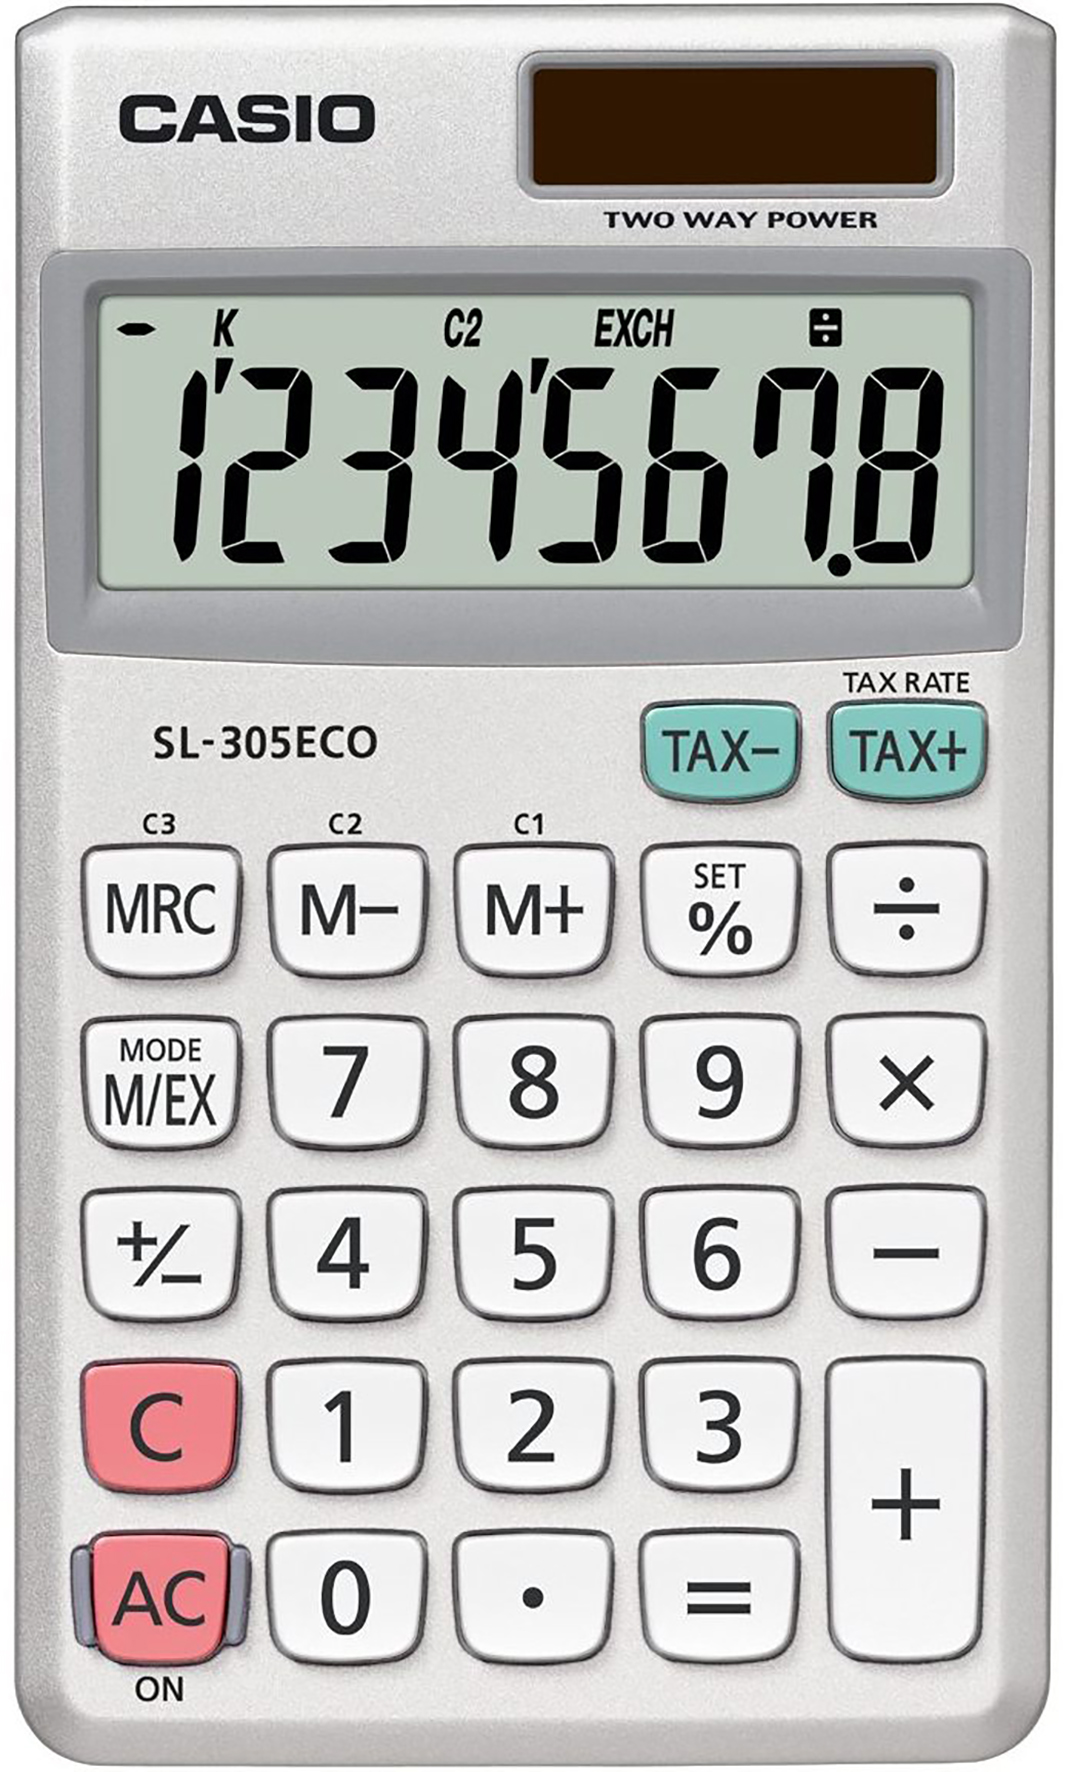 [8552456] Miniräknare Casio SL-305 ECO